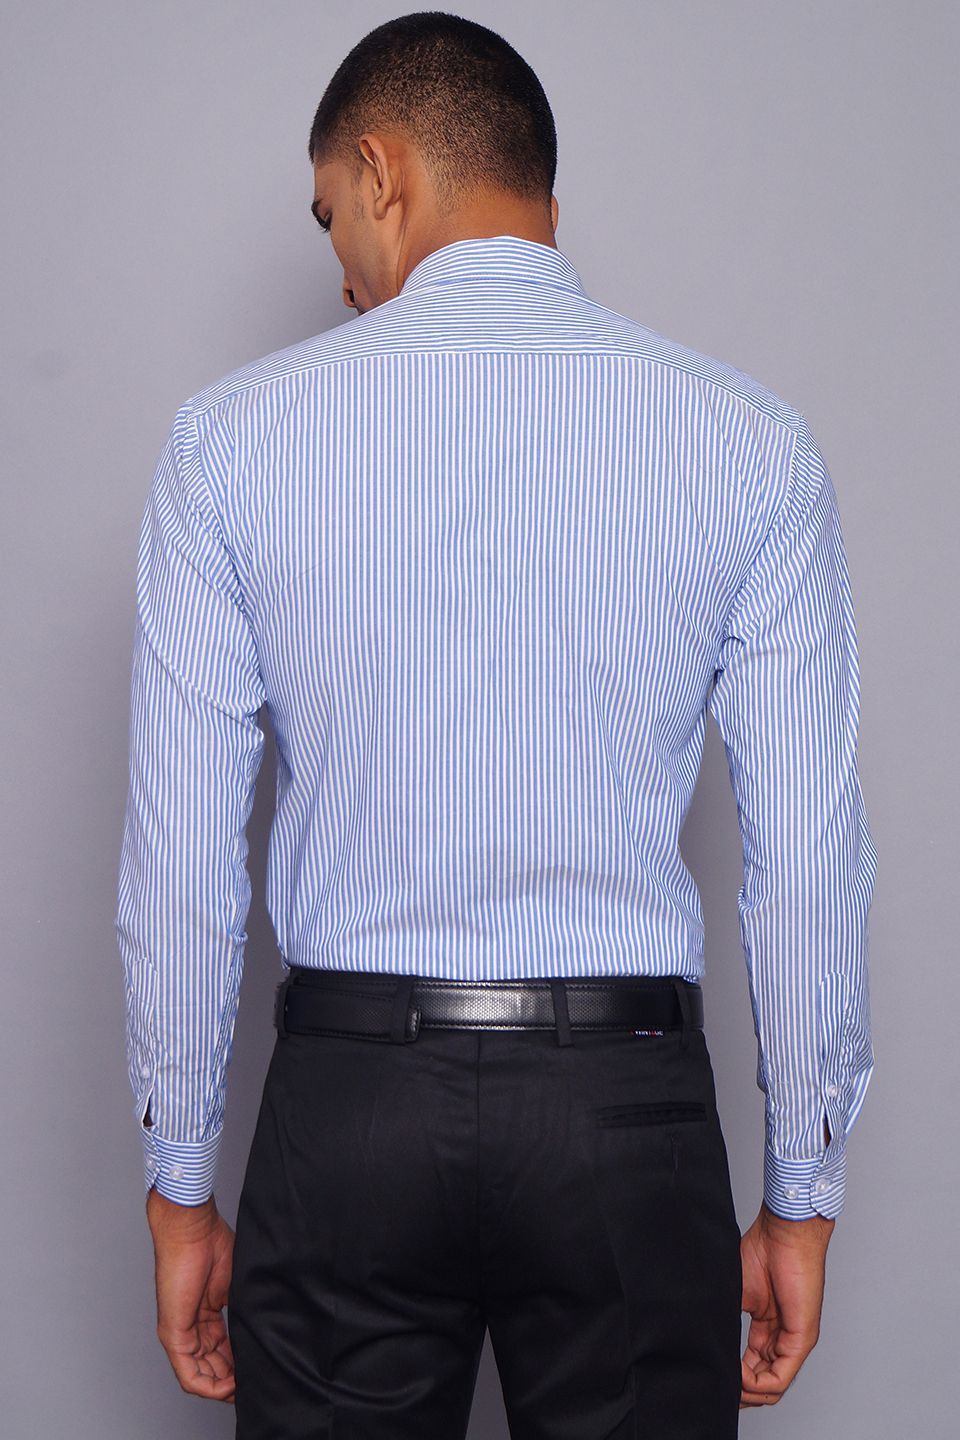 100% Premium Cotton Blue Strip Shirt